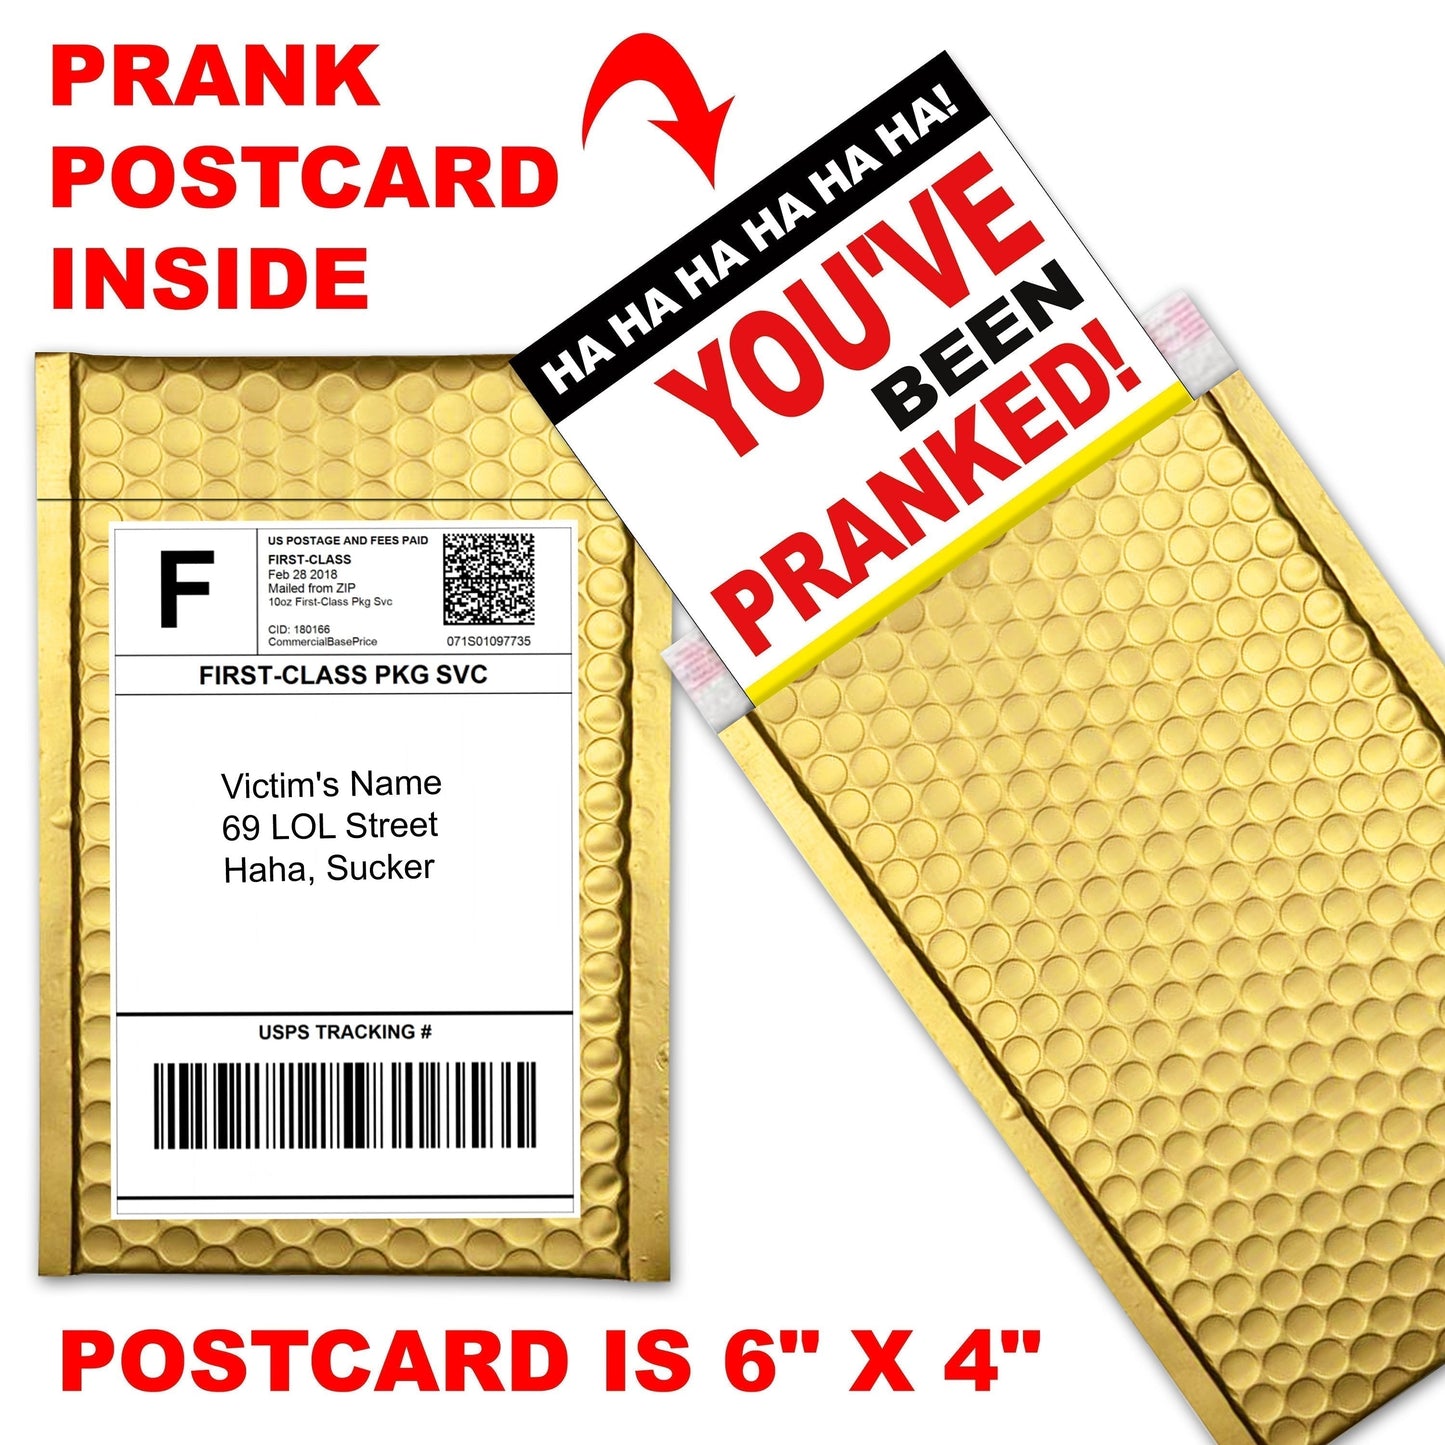 How to Seduce your Mailman Prank Mailer